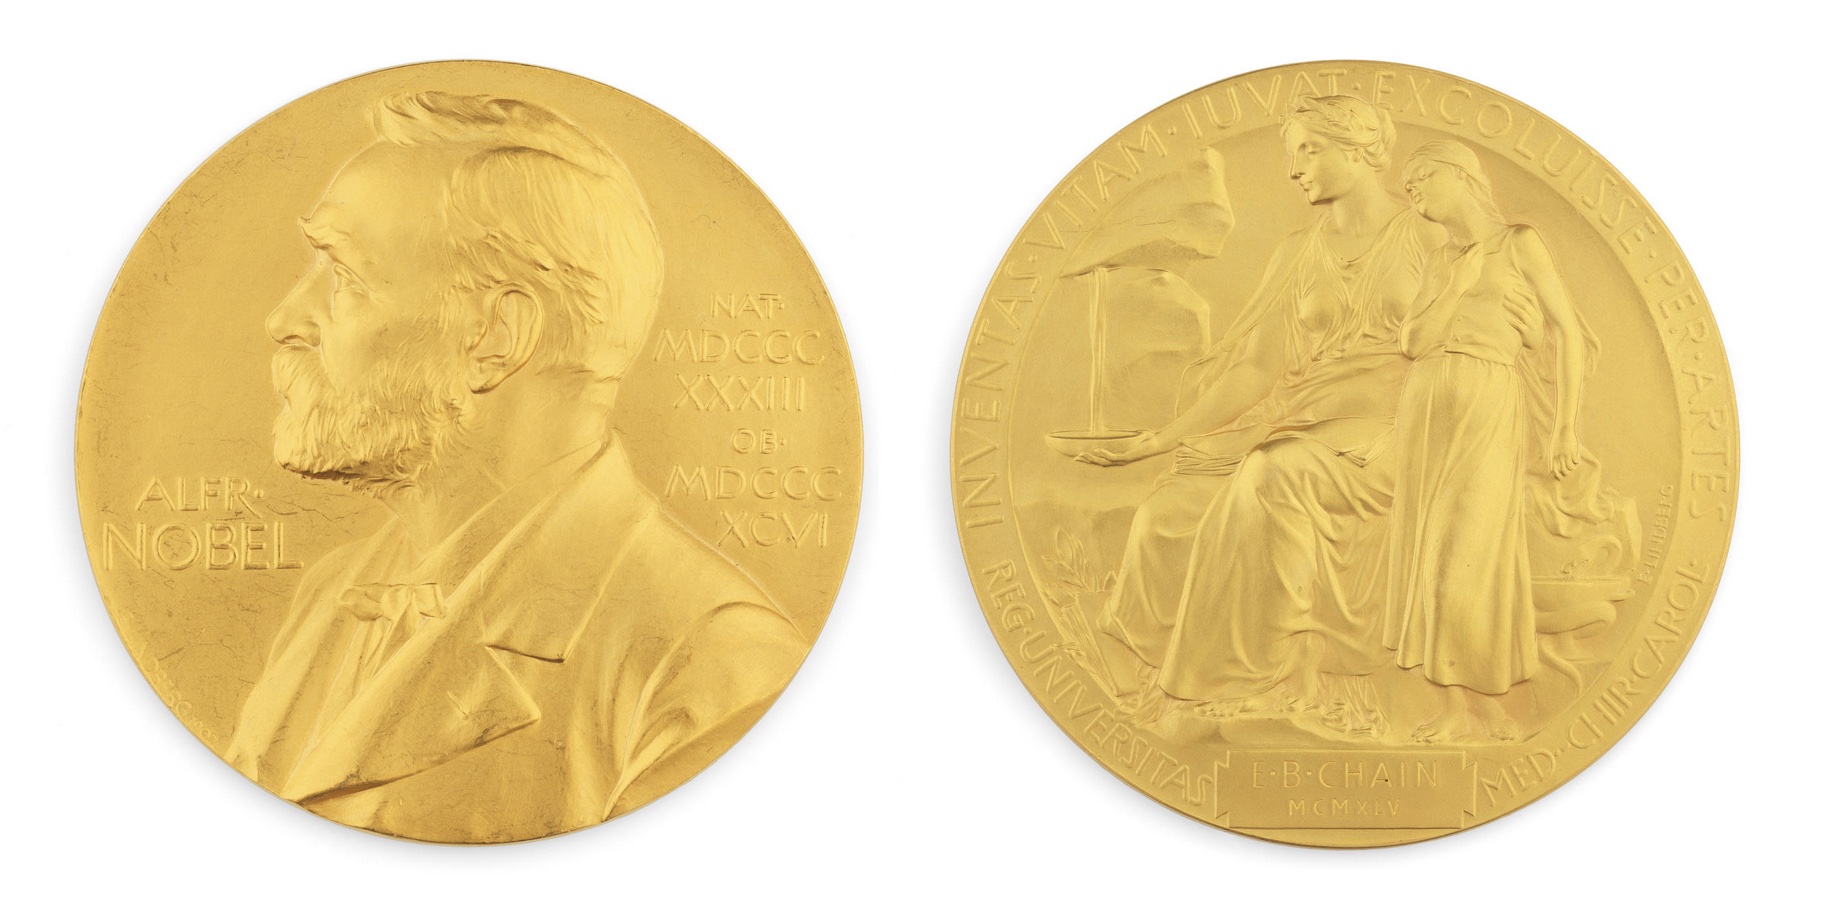 Sir Ernst Chain's Nobel Prize winner's medal